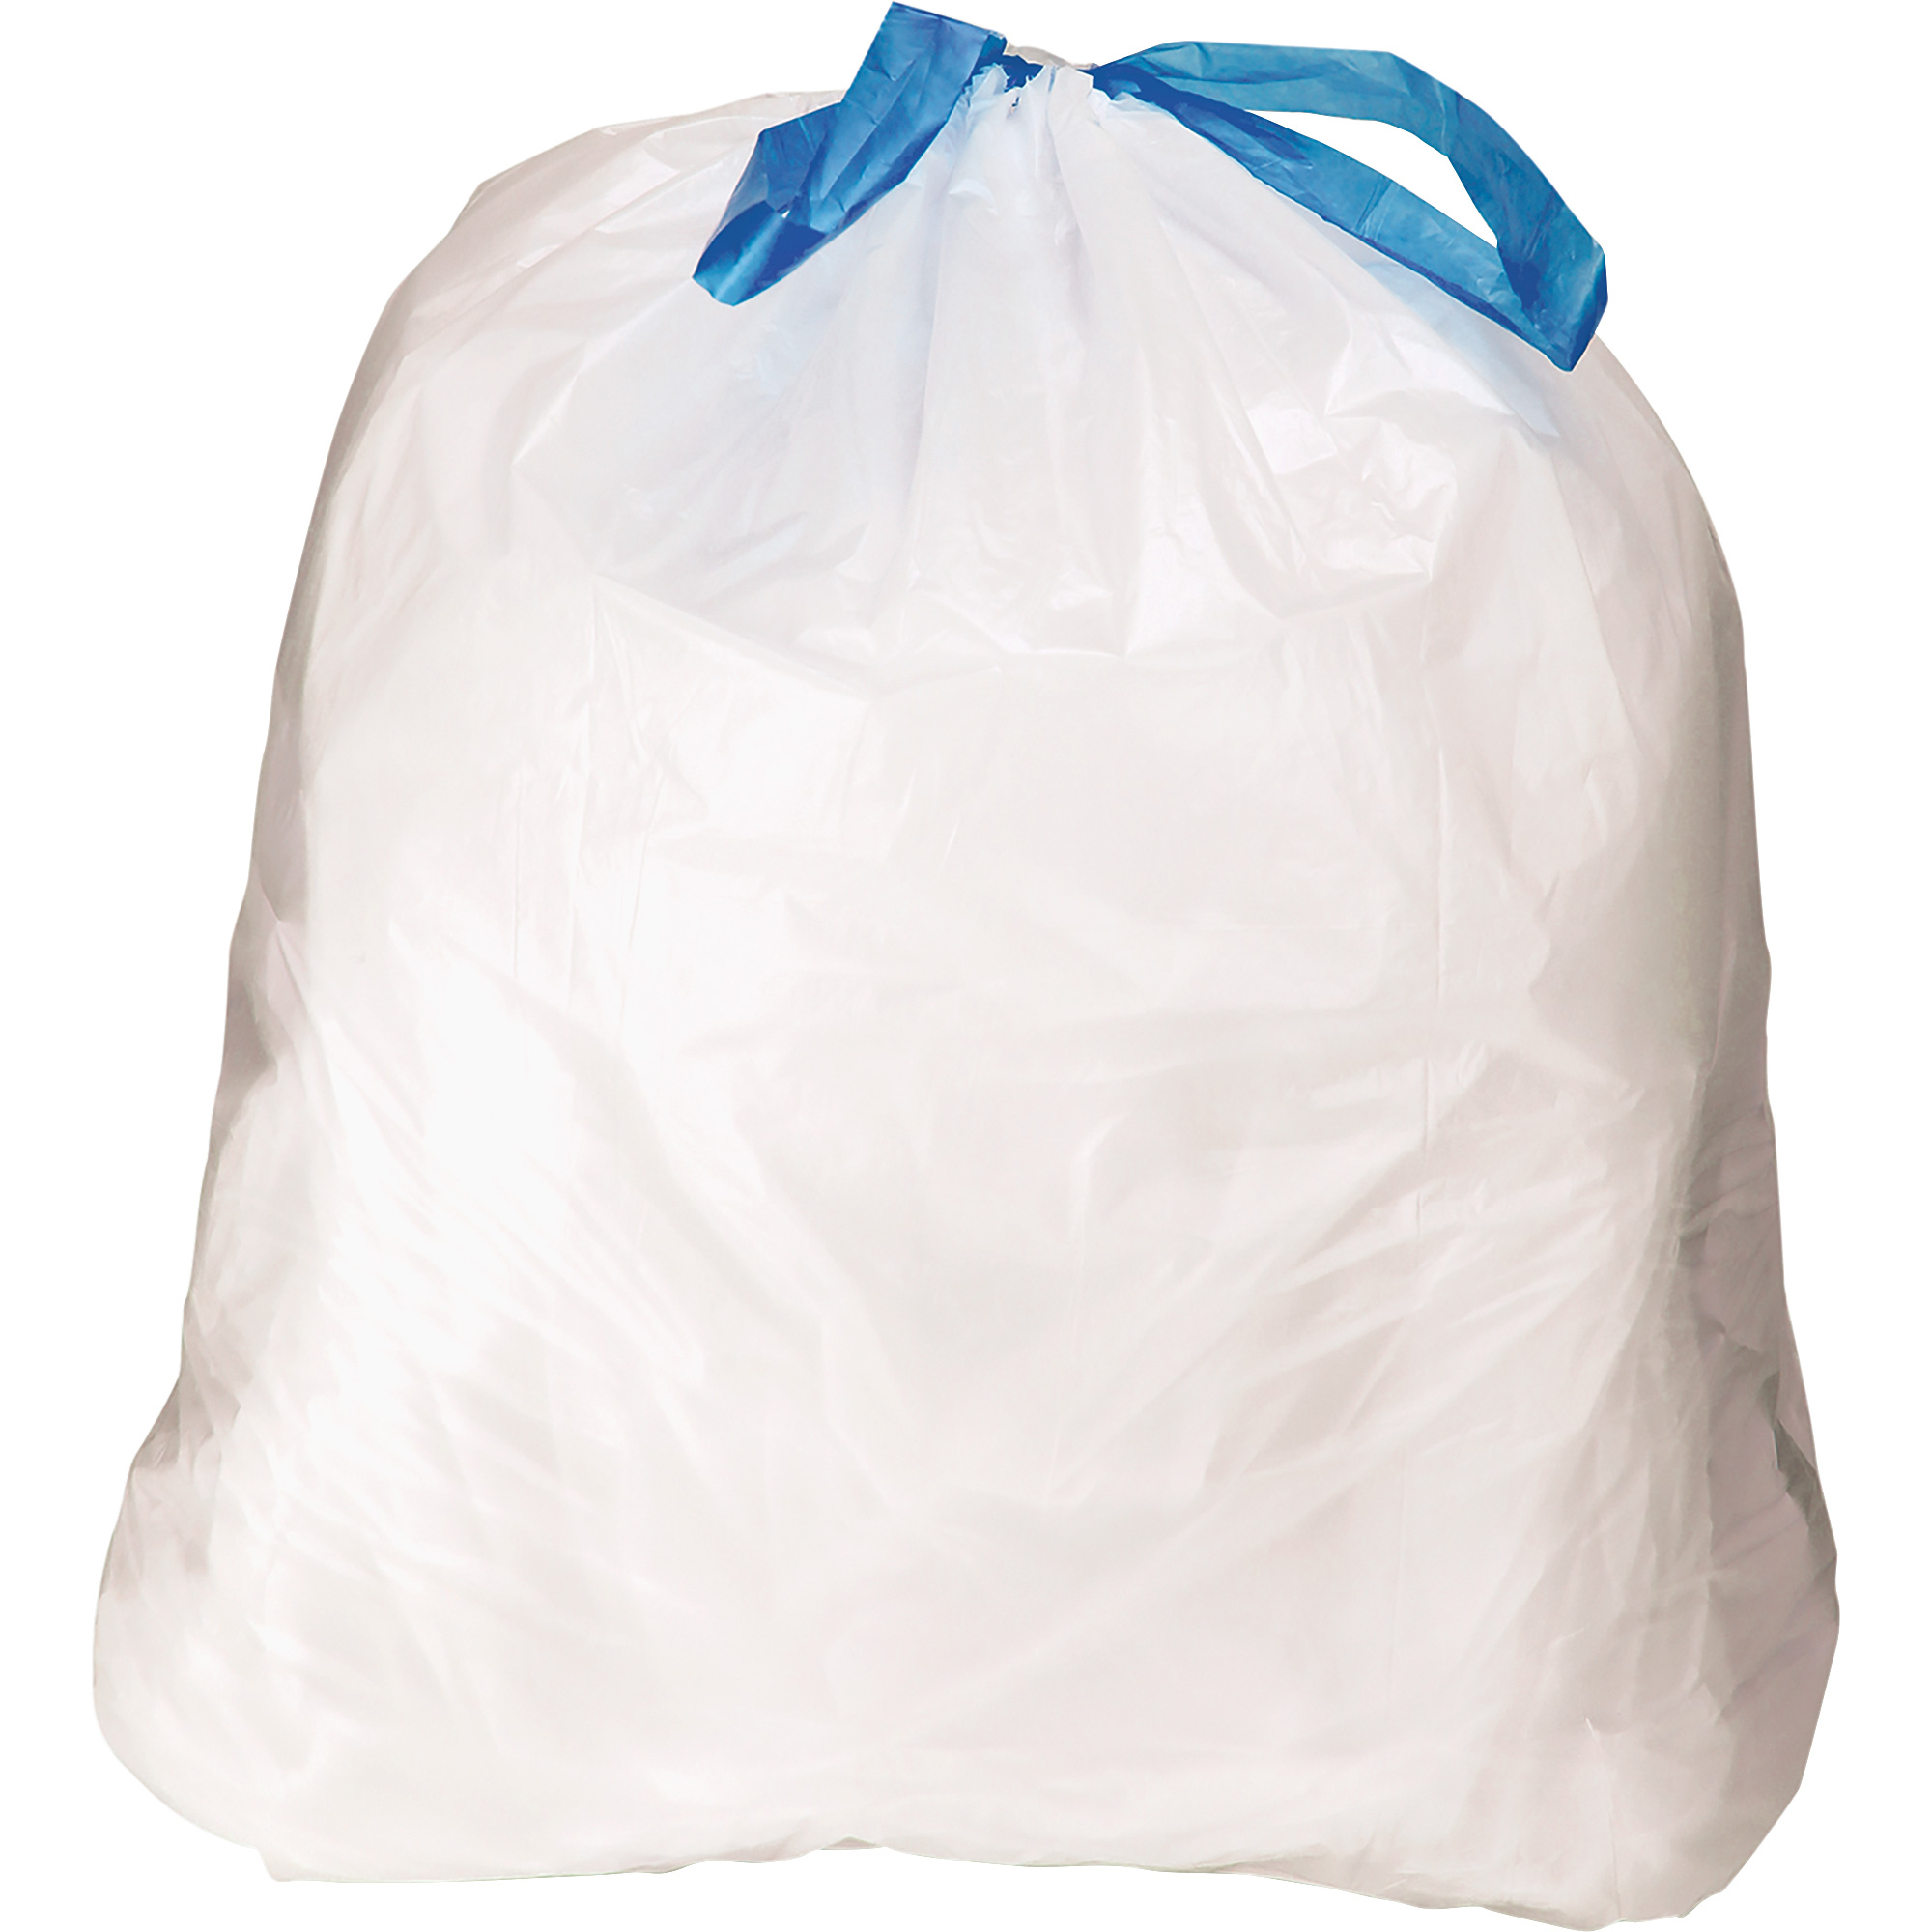 Hefty CinchSak 13-gallon Drawstring Bags - 13 gal Capacity - White -  45/Pack - Garbage, Kitchen - Filo CleanTech